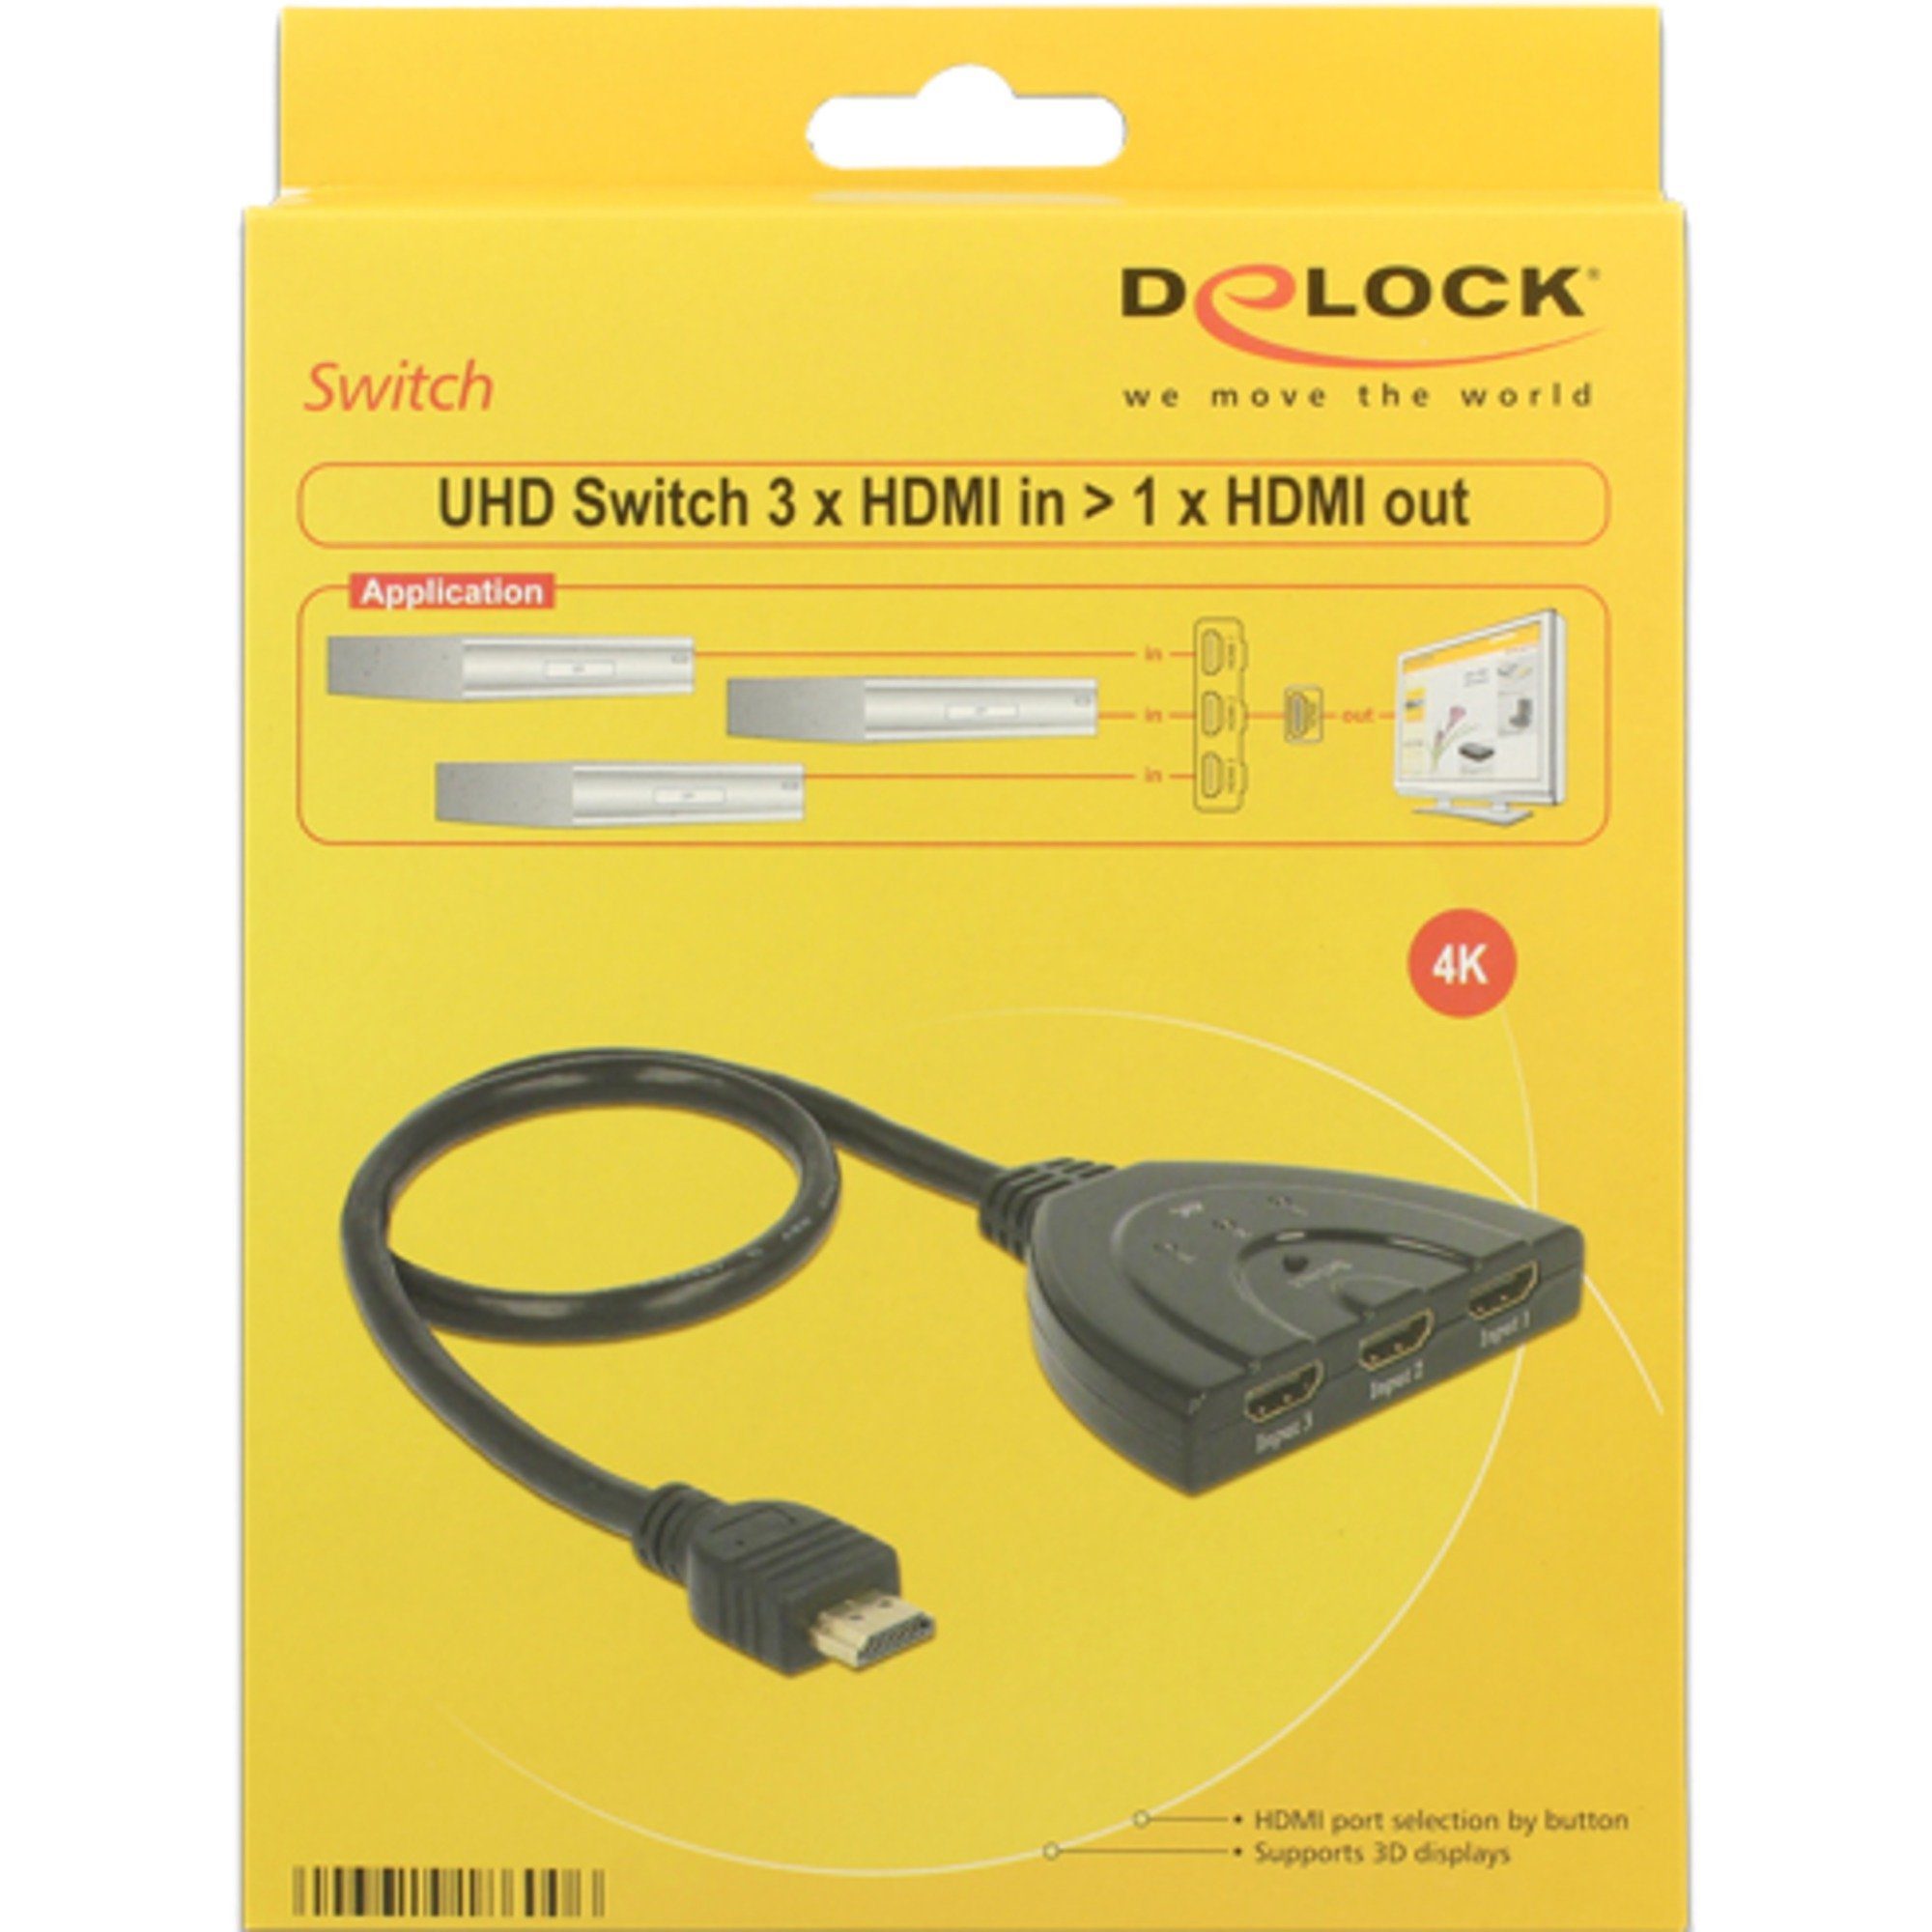 4K, in 1x 3x out Delock HDMI > HDMI HDMI Switch Computer-Kabel DeLOCK